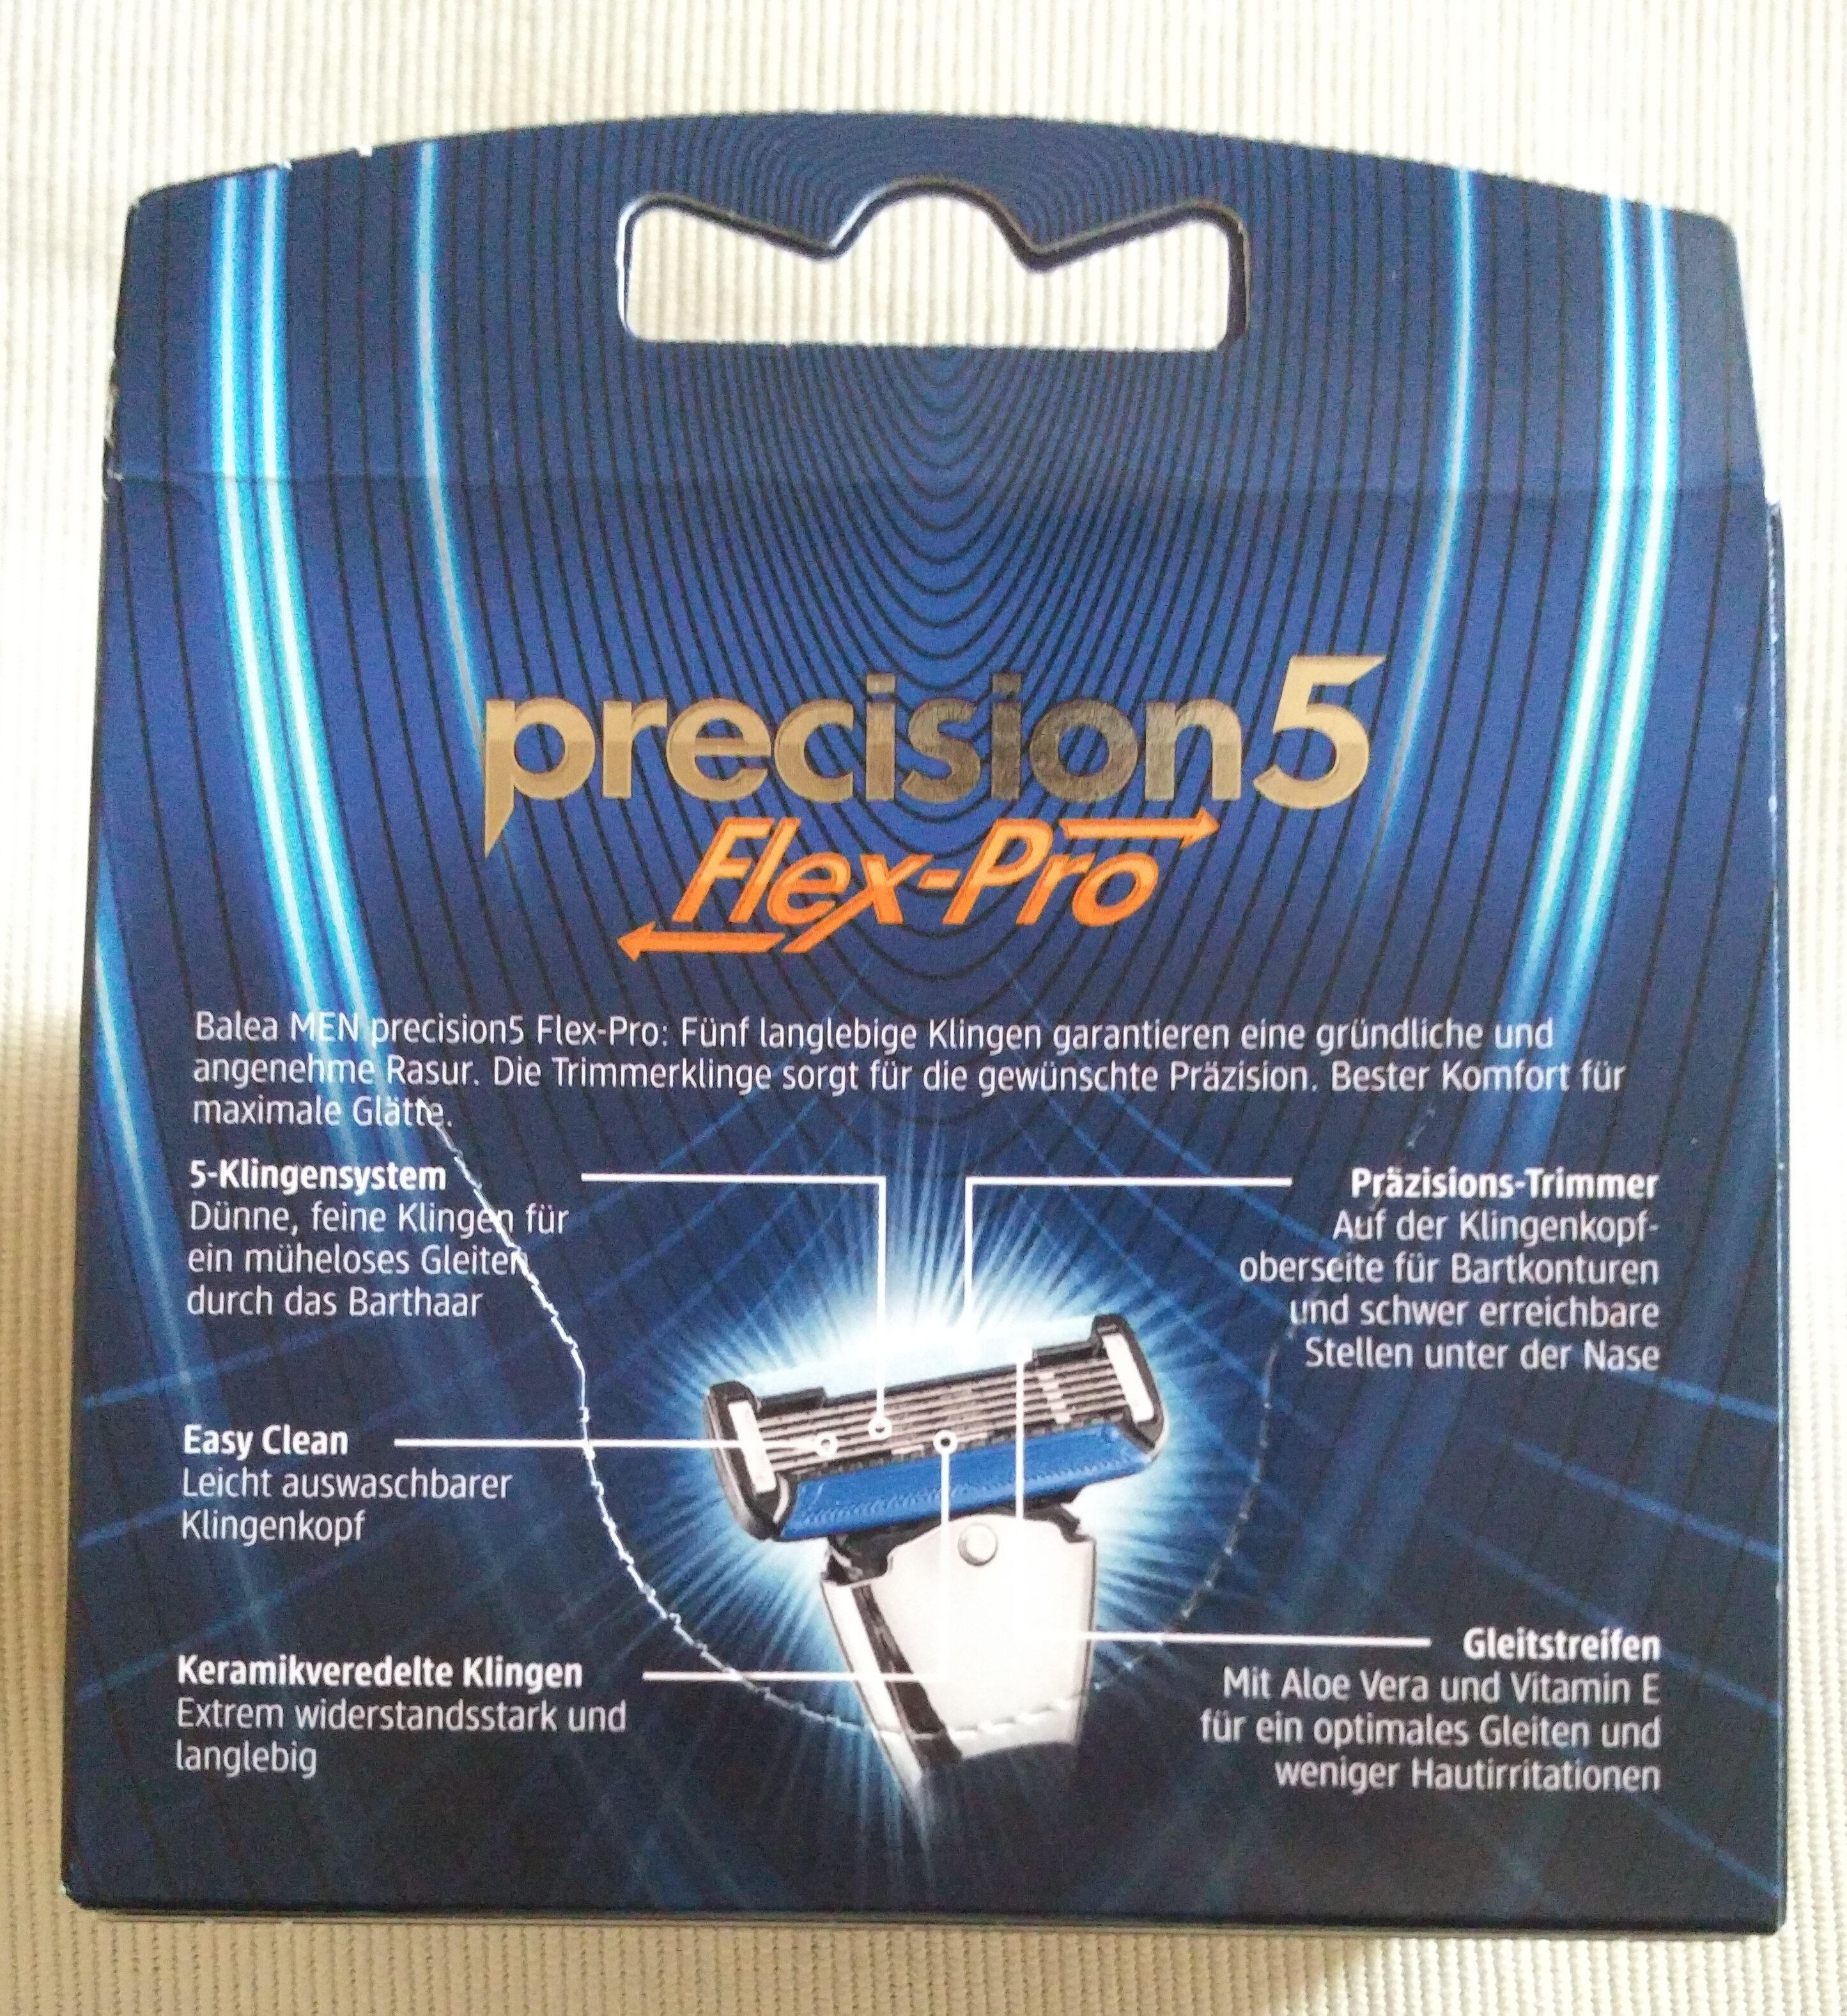 precision 5 Flex-Pro (5-Klingensystem mit Präzisionstrimmer) - Product - en